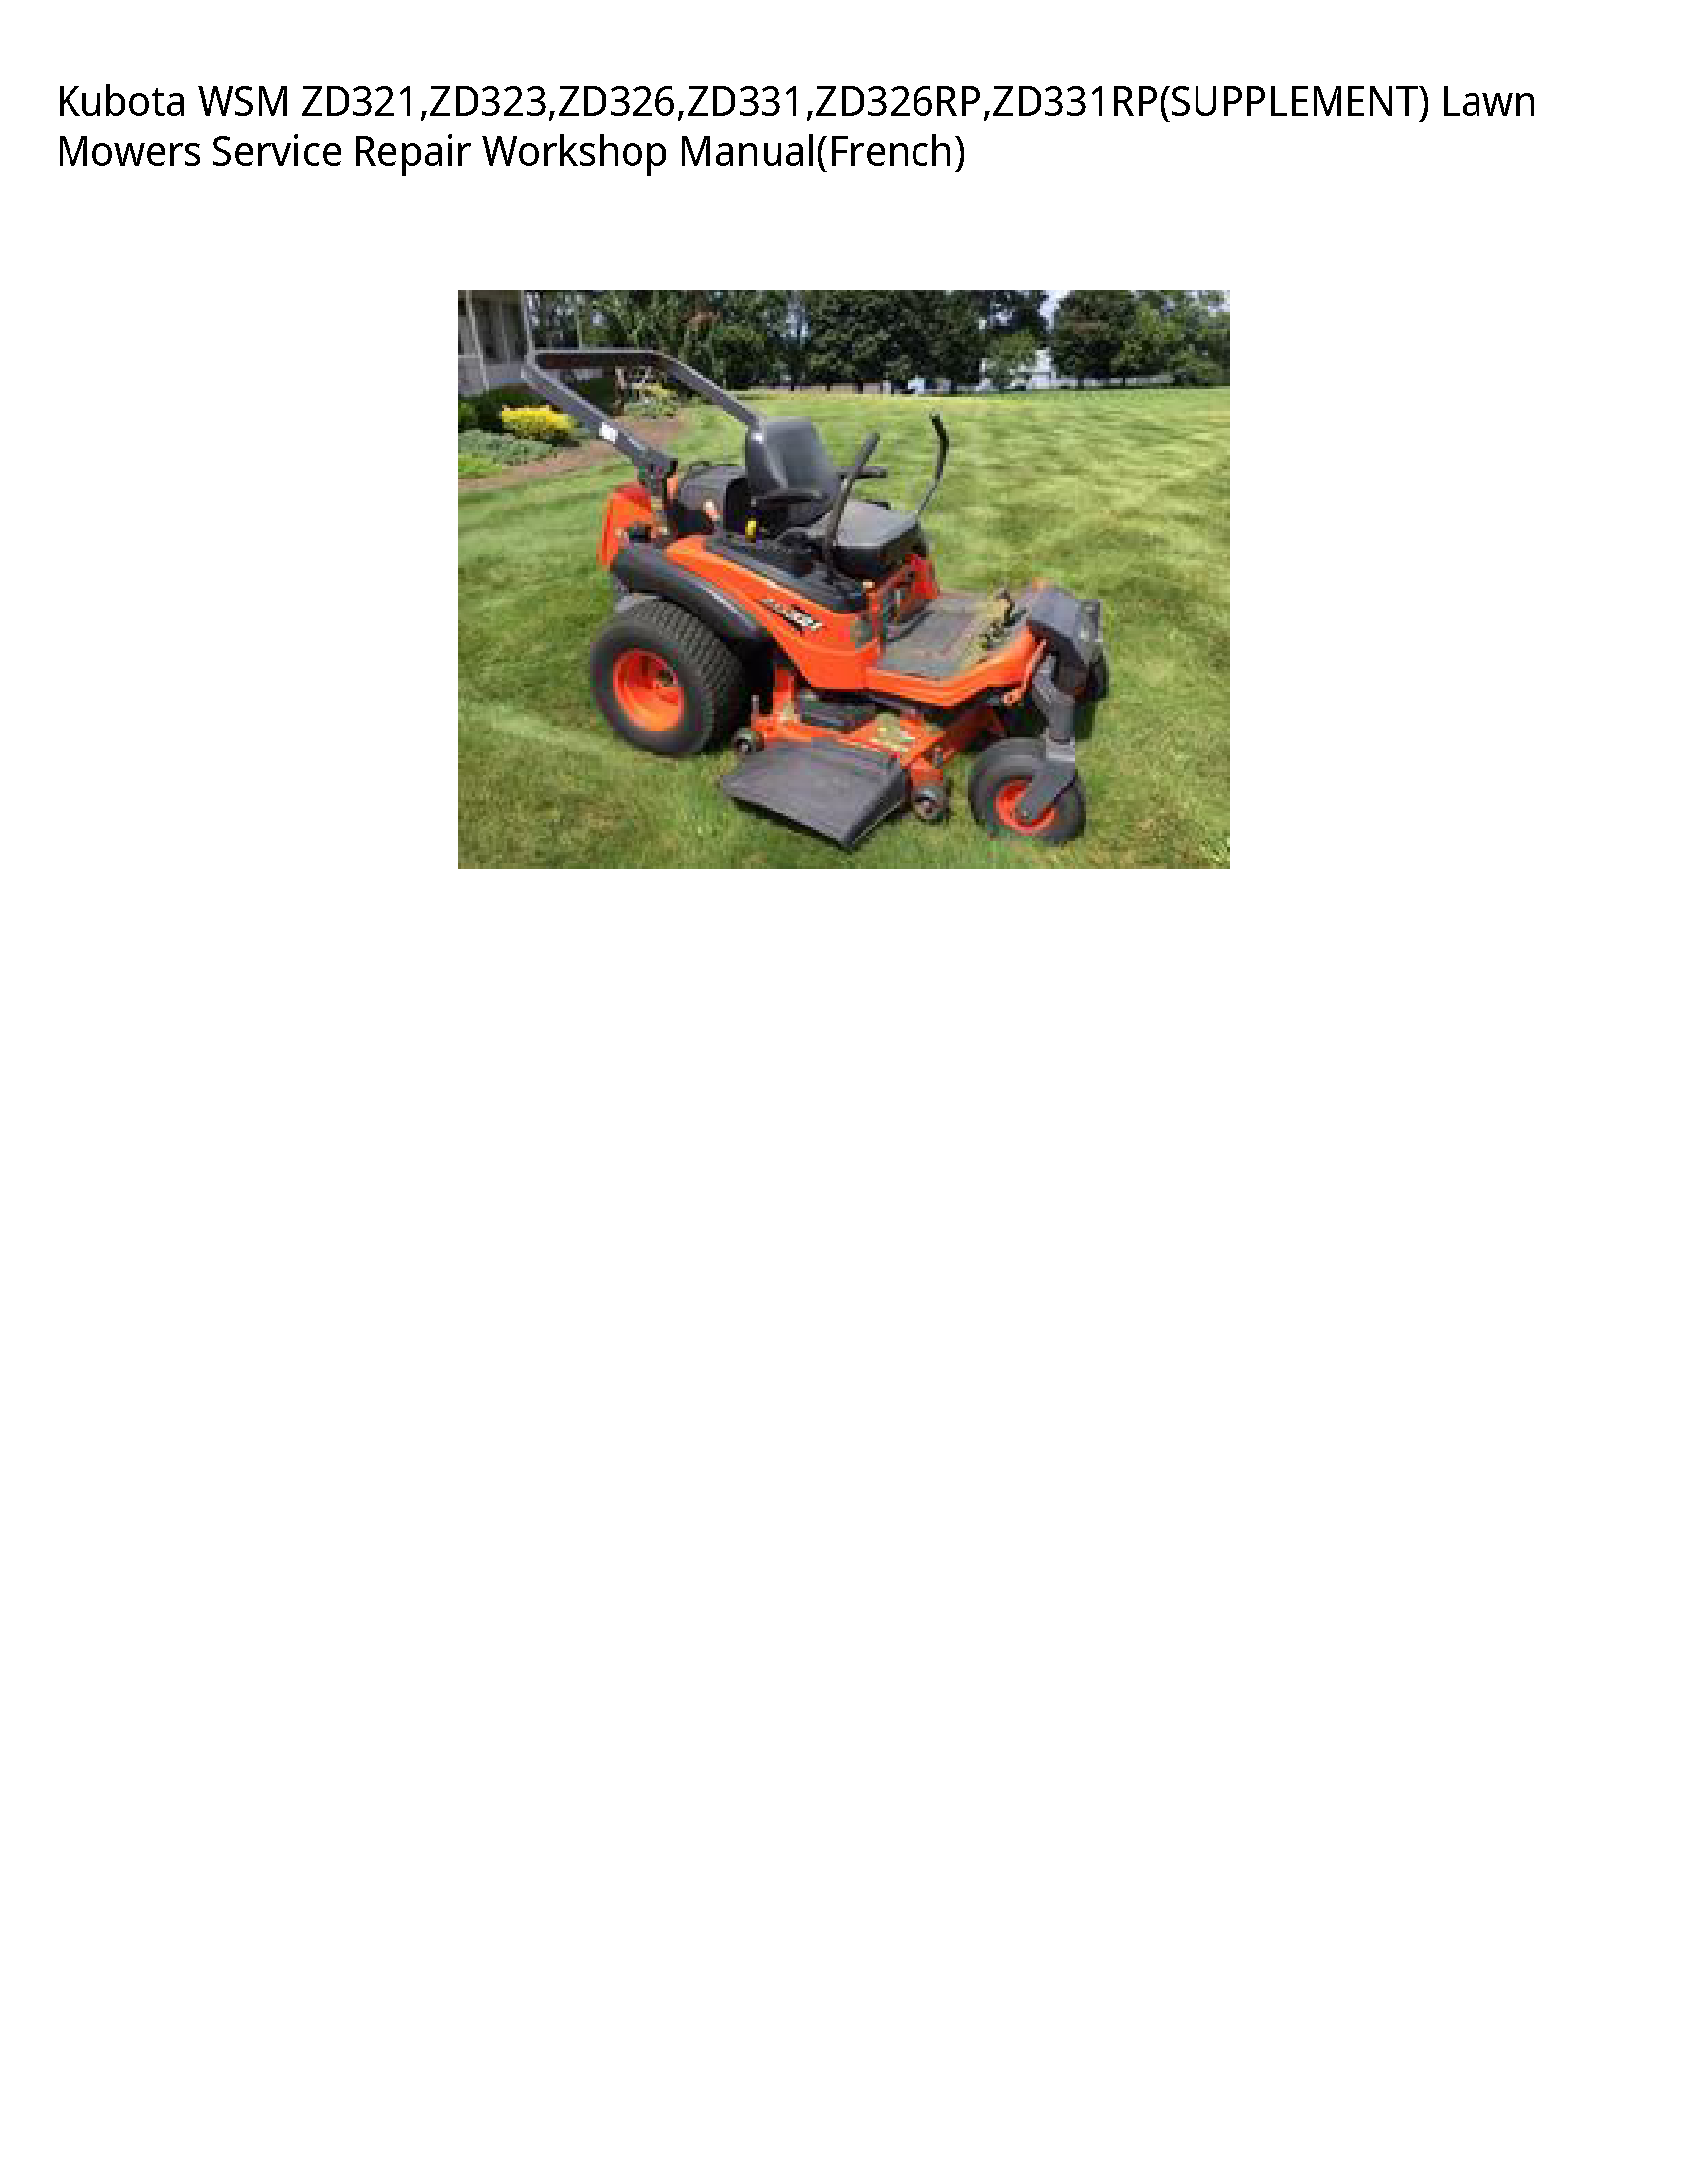 Kubota ZD321 WSM Lawn Mowers manual